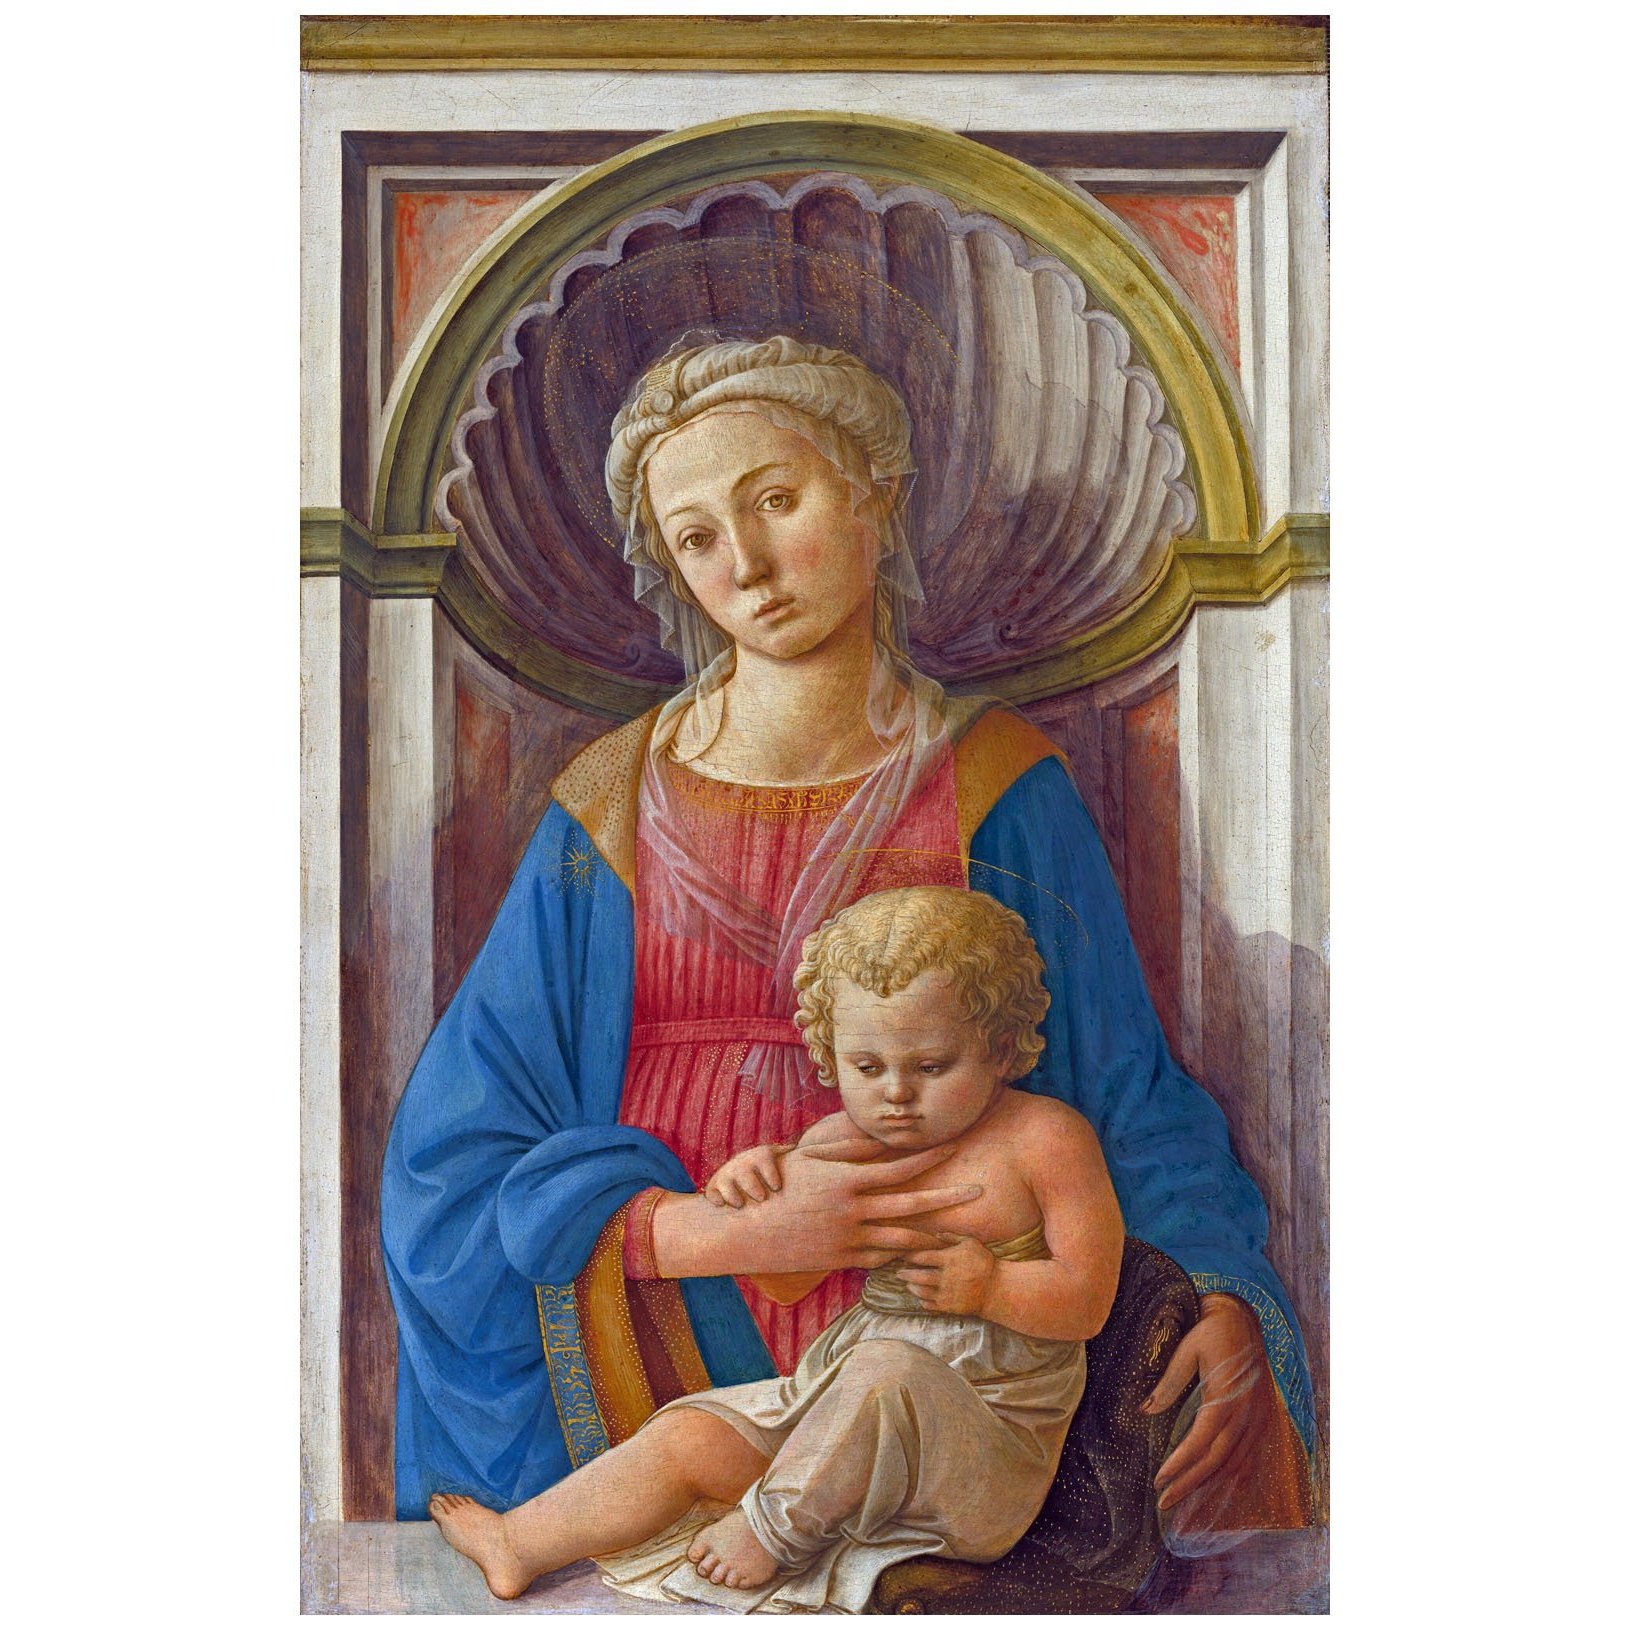 Fra Folippo Lippi. Madonna col bambino. 1440-1445. NGA Washindgton